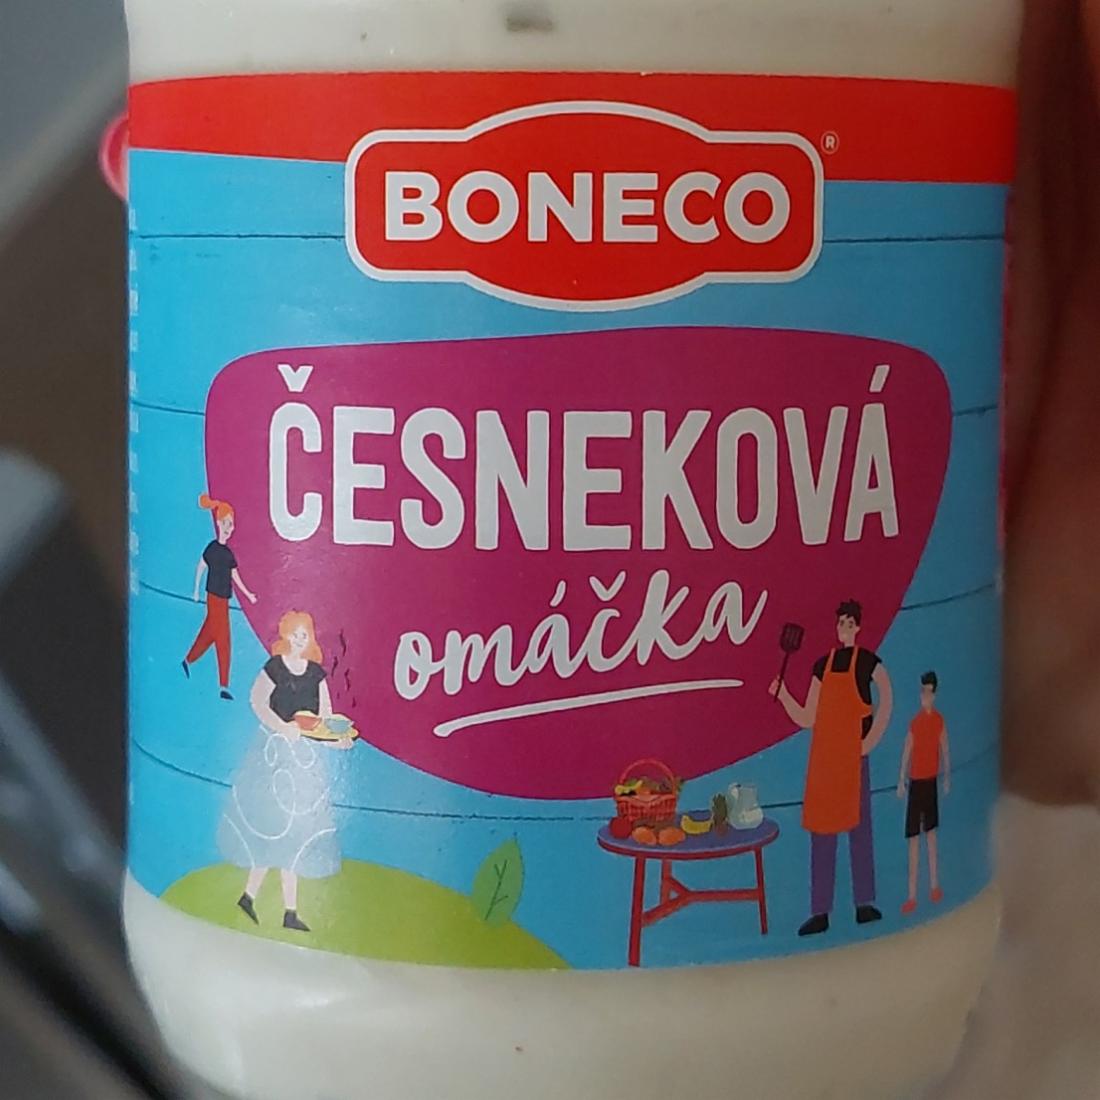 Fotografie - Česneková omáčka Boneco